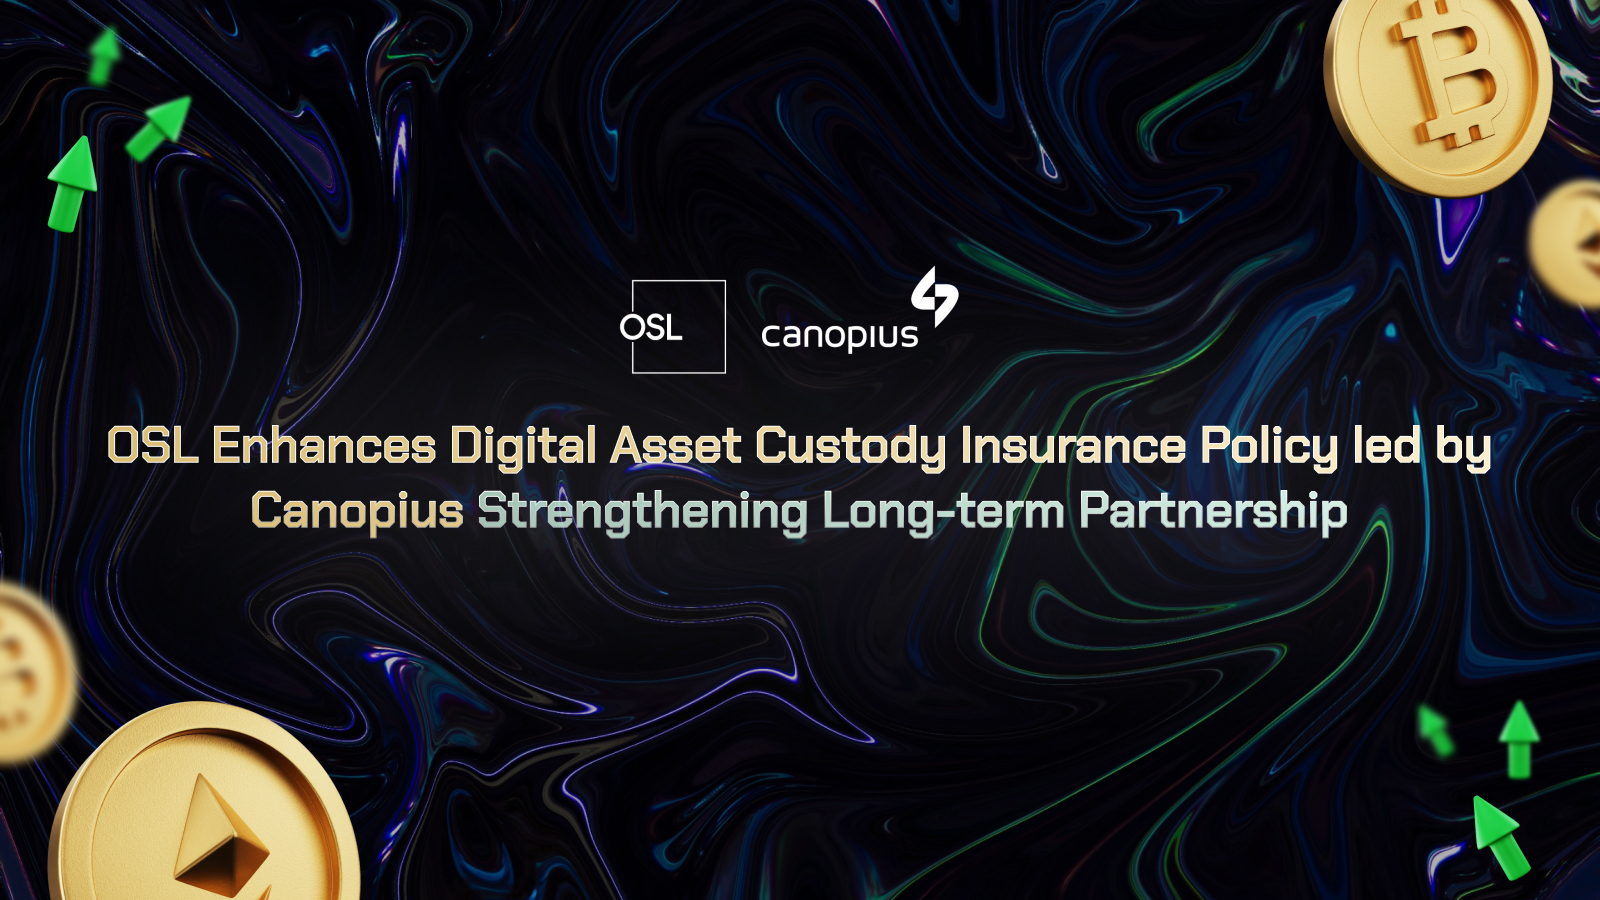 OSL Enhances Digital Asset Custody Insurance Policy led by Canopius, a Lloyd’s of London Syndicate, Strengthening Long-term Partnership